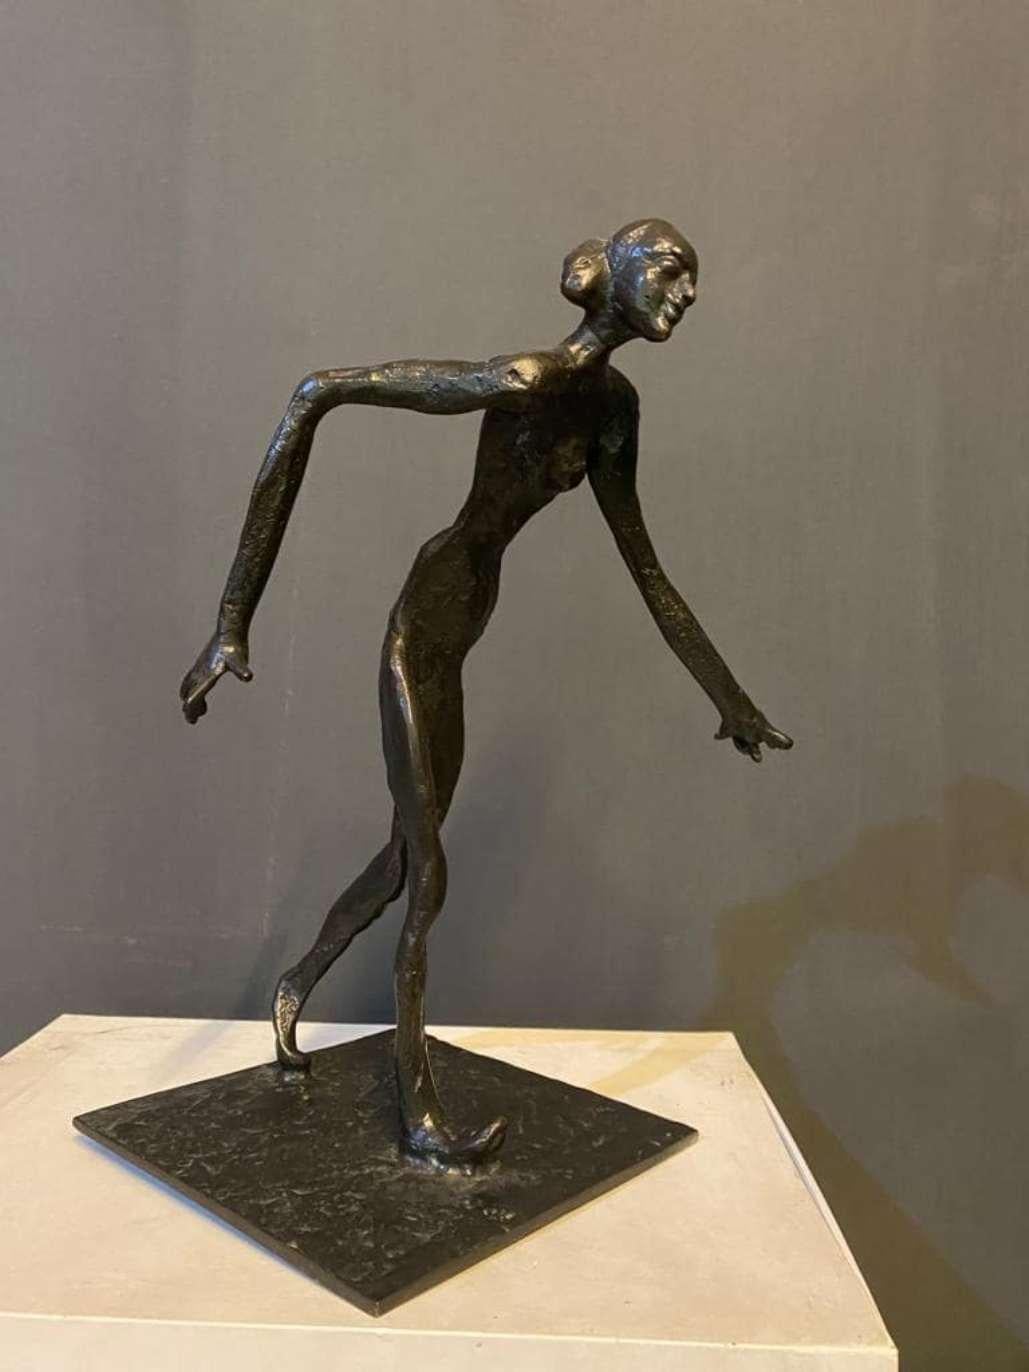 Ramp Figure, Bronze Sculpture, Black color by Modern Indian Artist "In Stock"